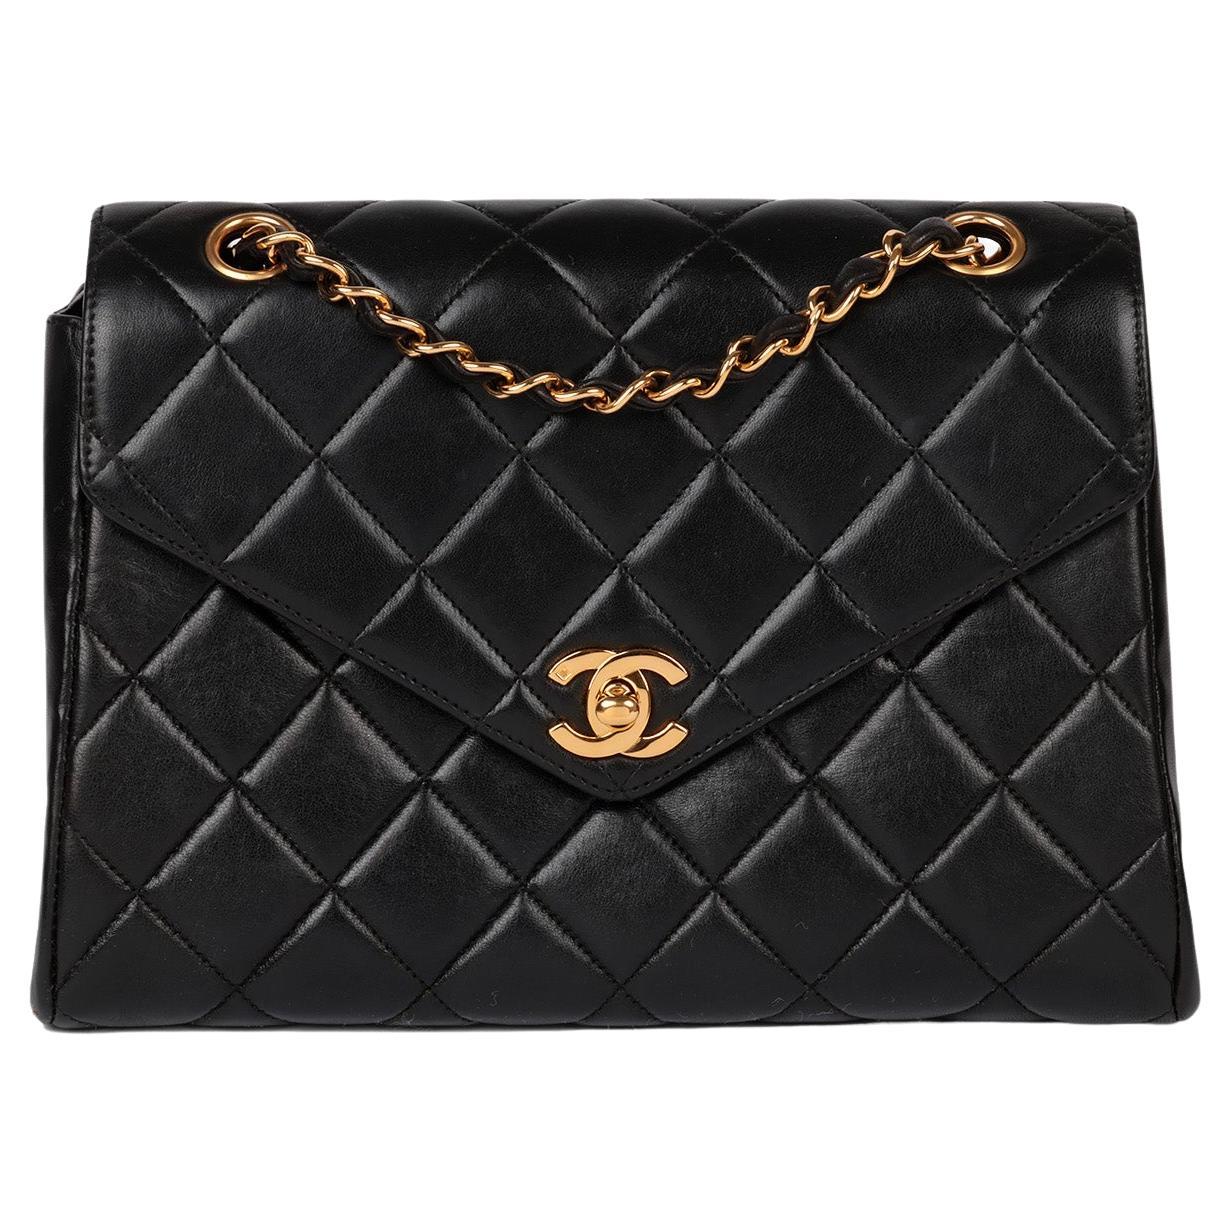 Chanel Black Quilted Lambskin Vintage Medium Envelope Classic Single Flap Bag